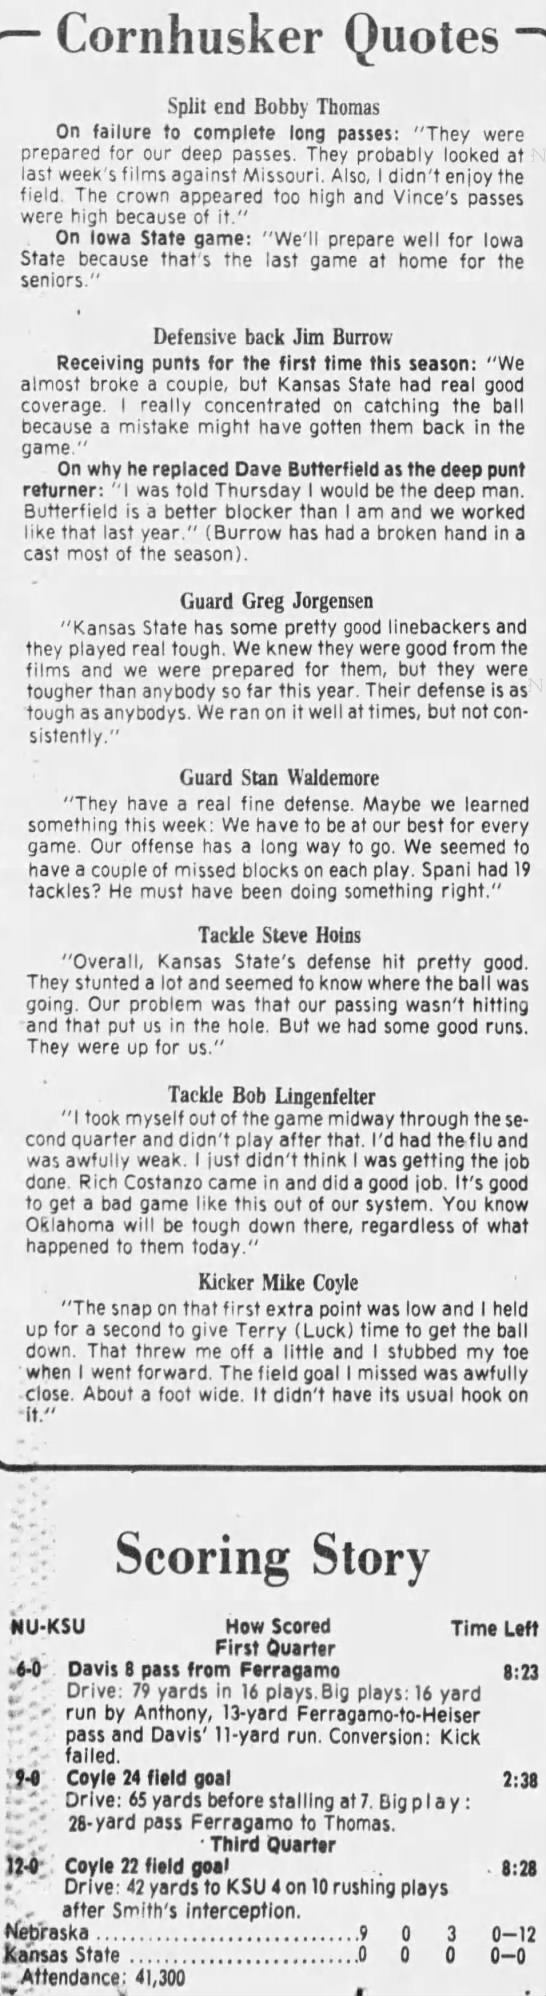 1975 Nebraska-Kansas State, quotes & summary - 